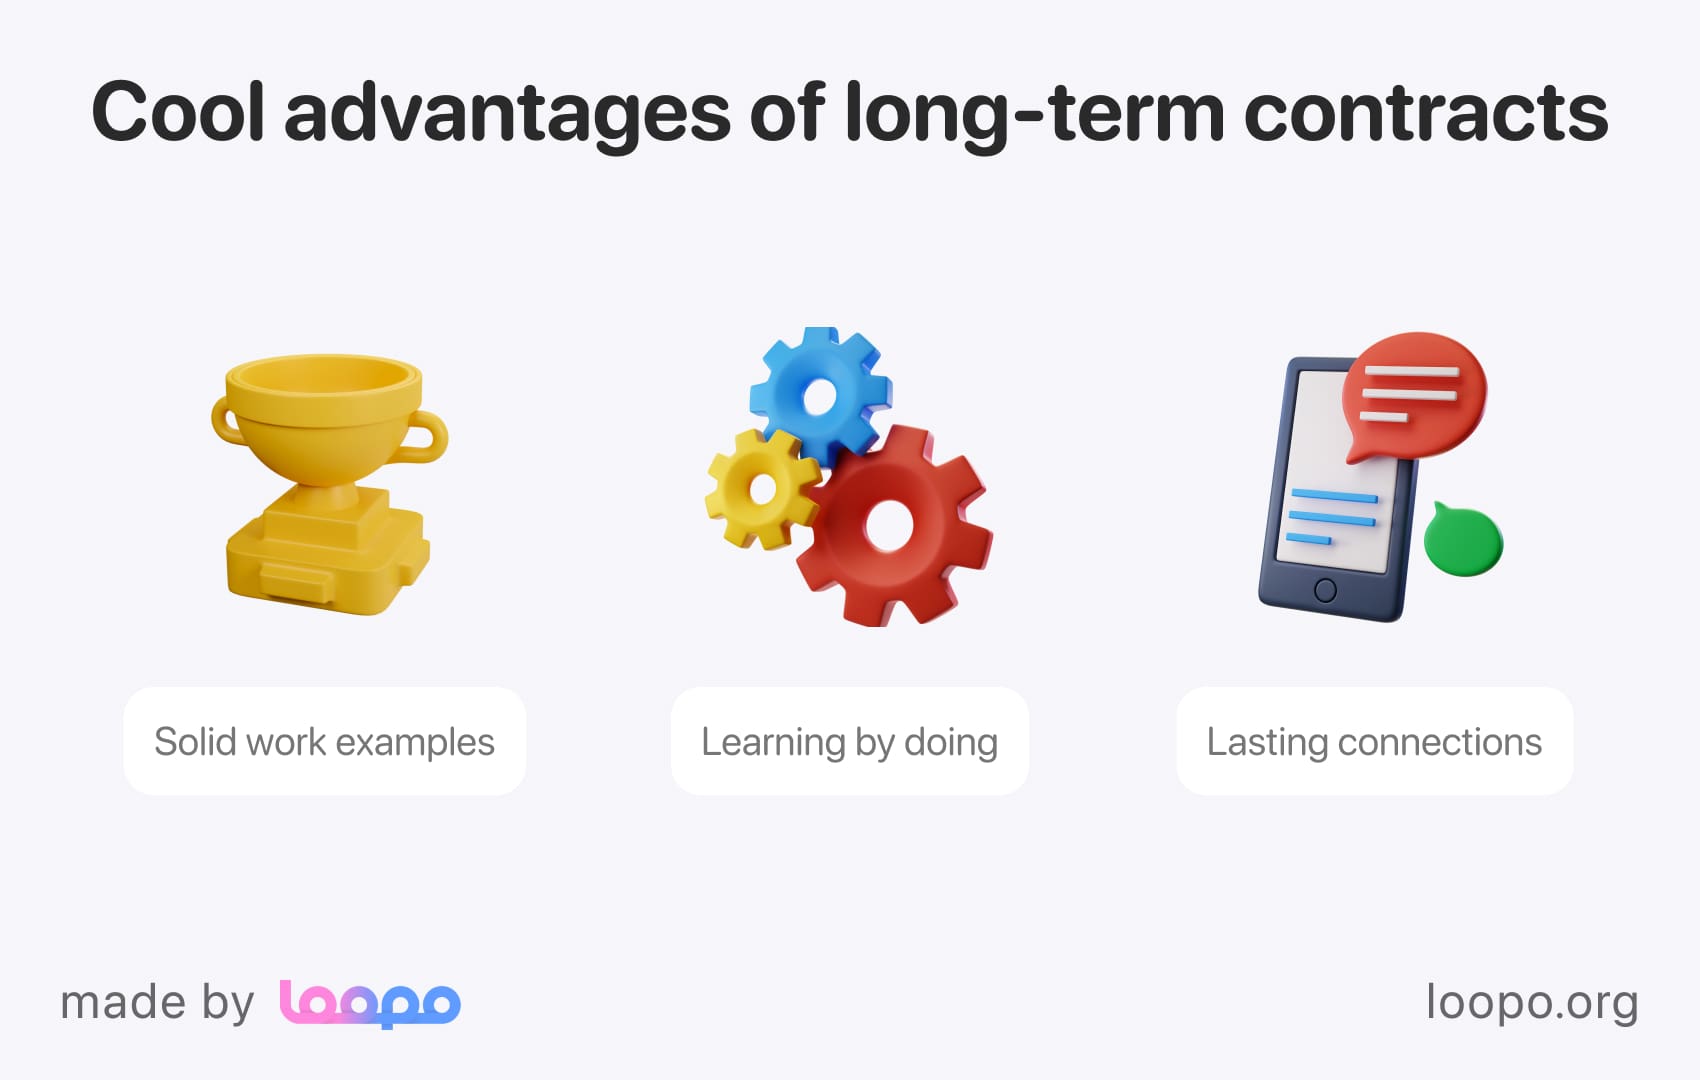 Major advantages of long-term contracts